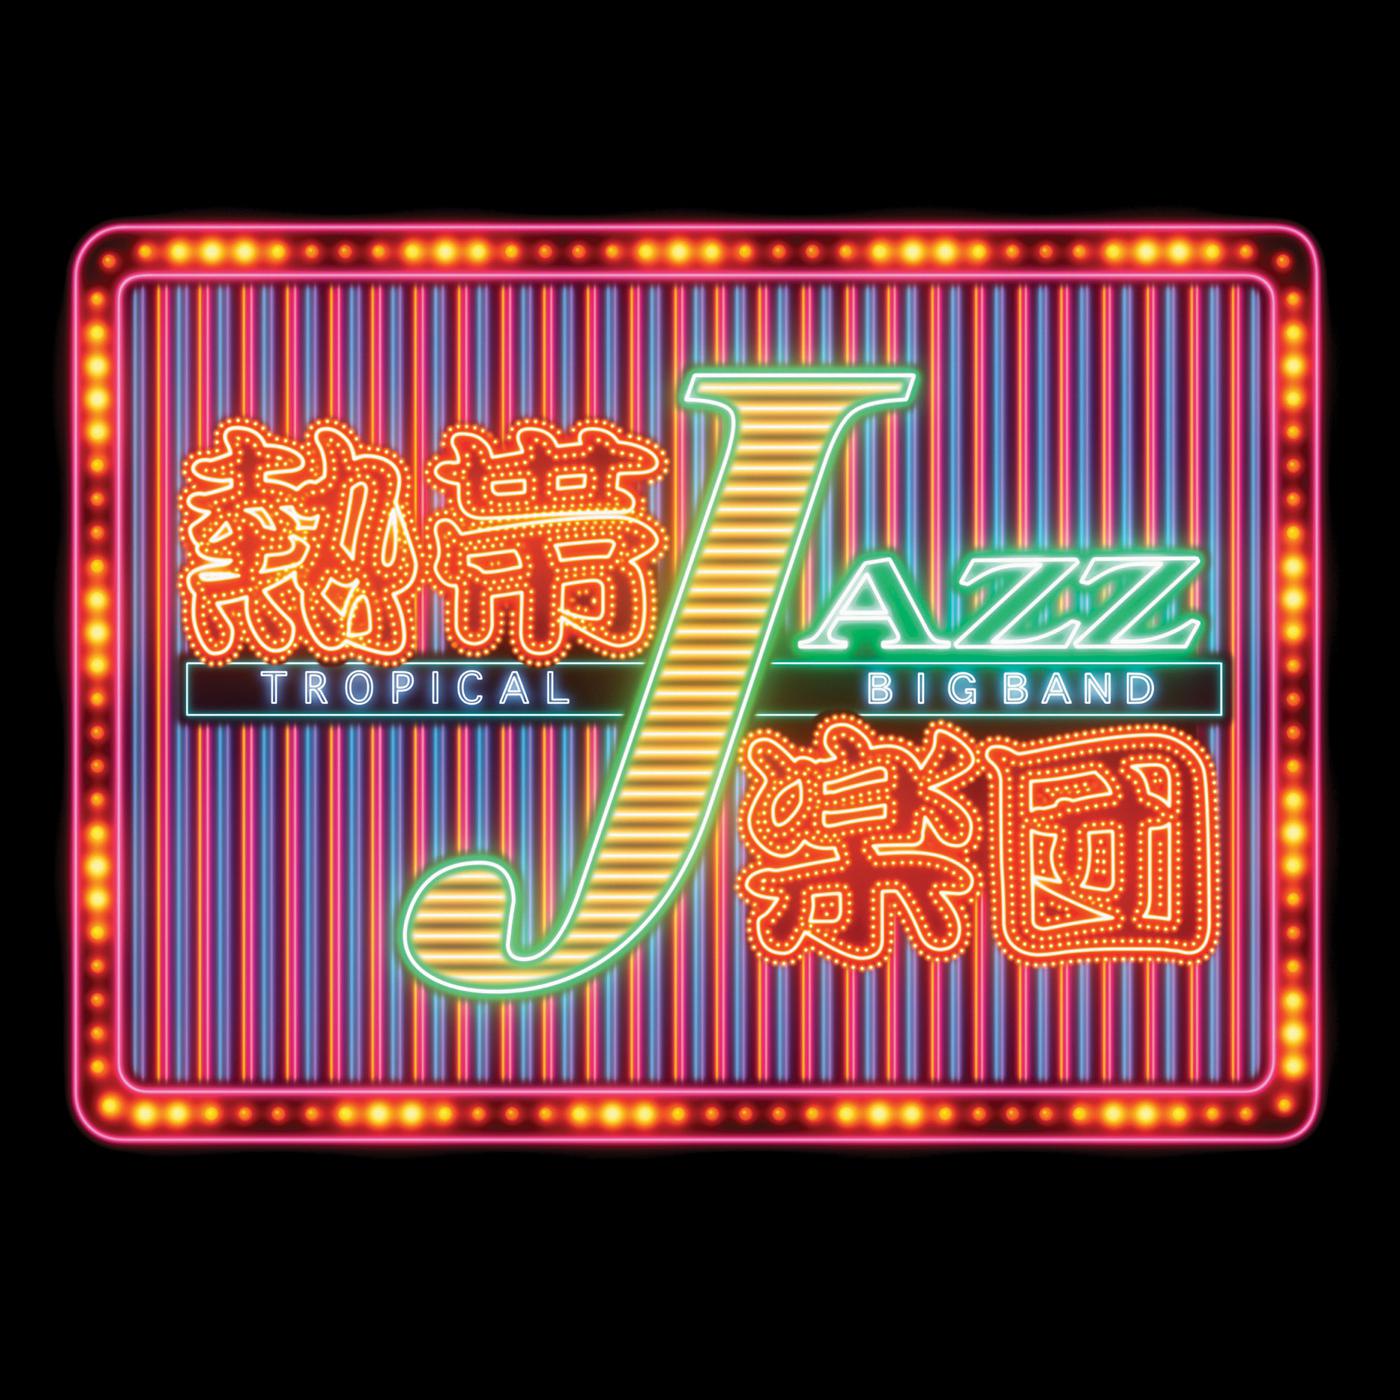 SEPTEMBER歌词 歌手熱帯JAZZ楽団-专辑TROPICAL JAZZ BIG BAND VIII-The Covers--单曲《SEPTEMBER》LRC歌词下载